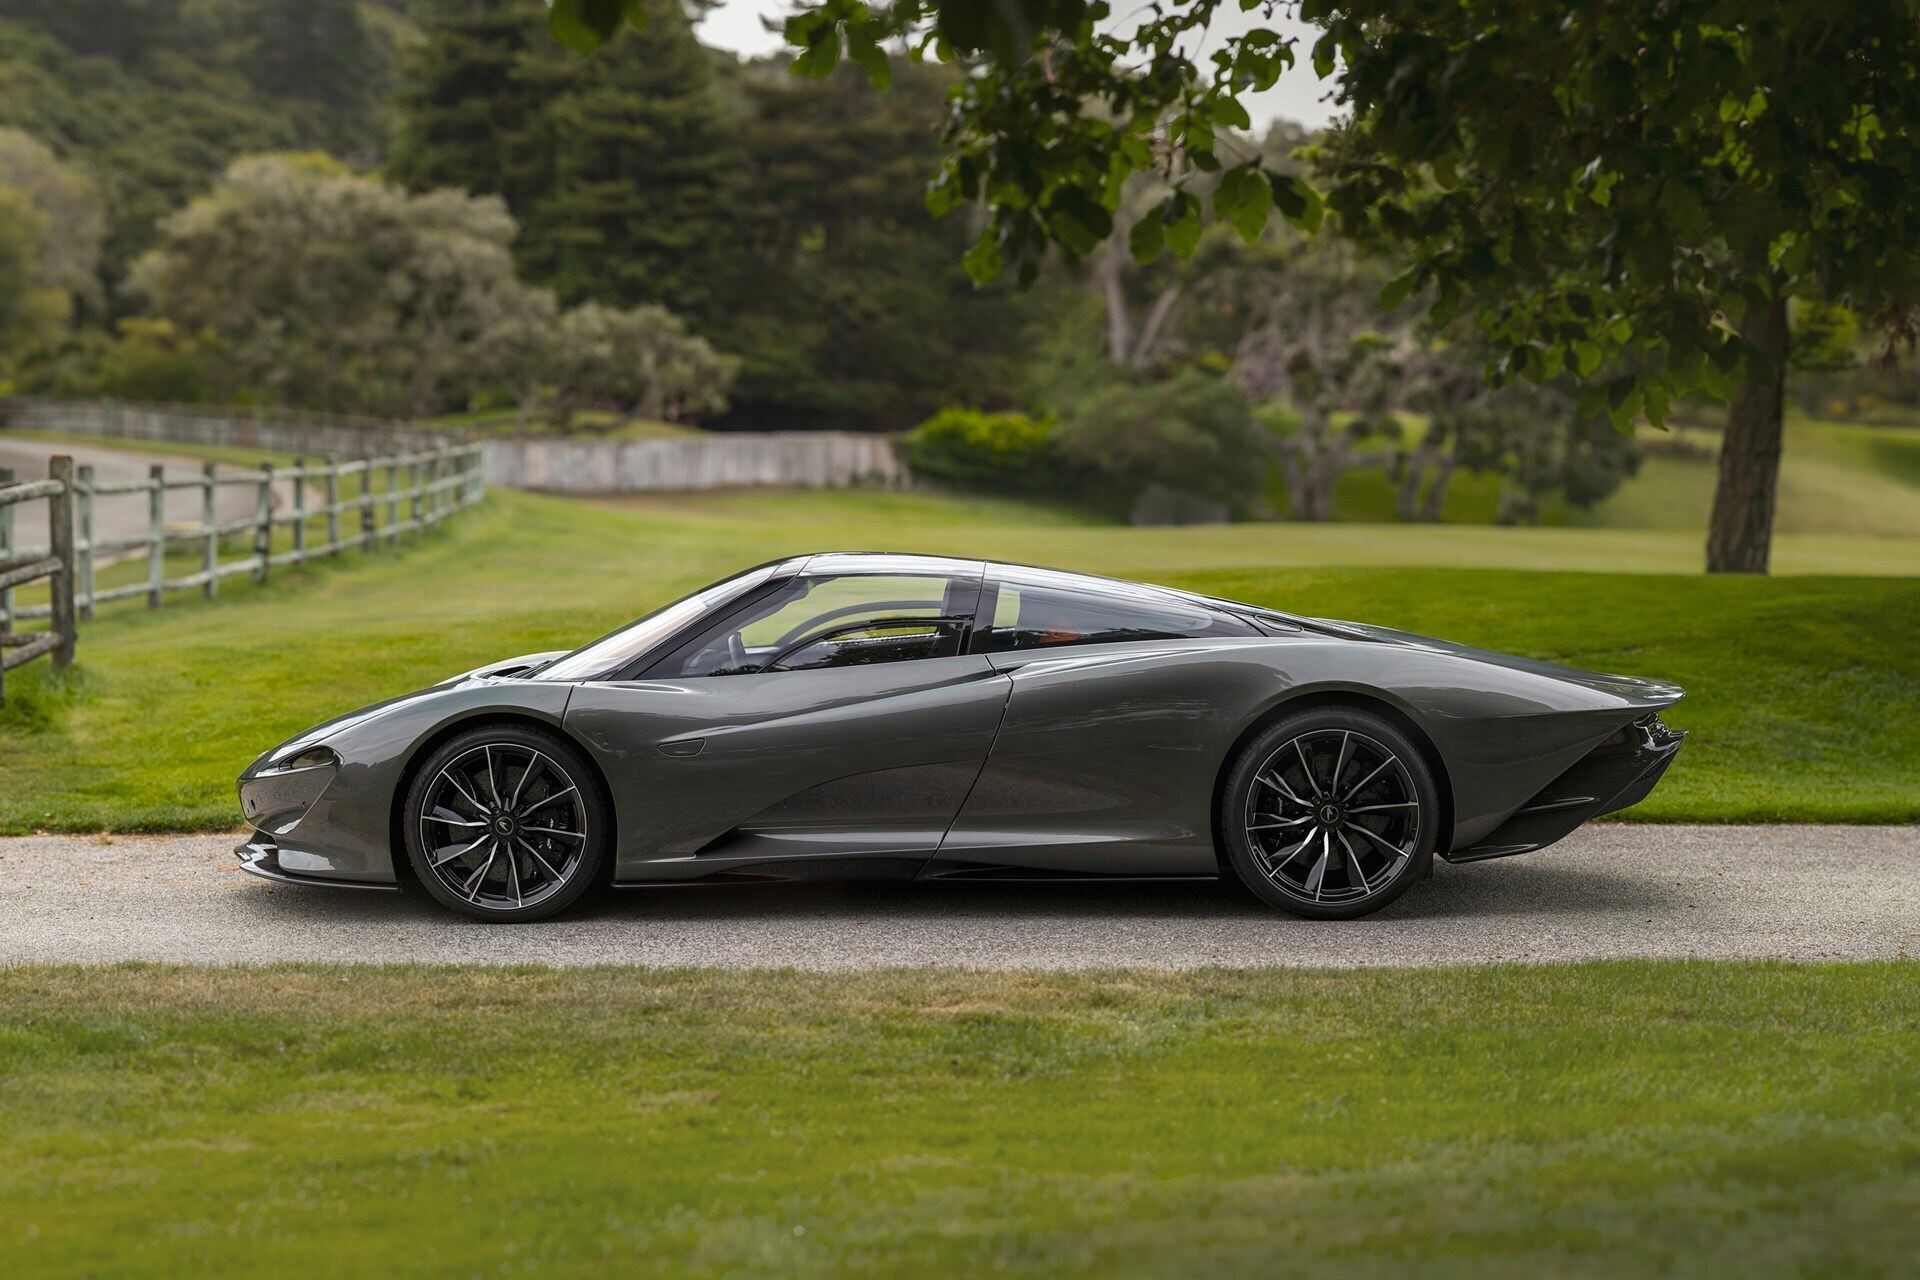 Side profile of a 2020 Grey McLaren Speedtail.